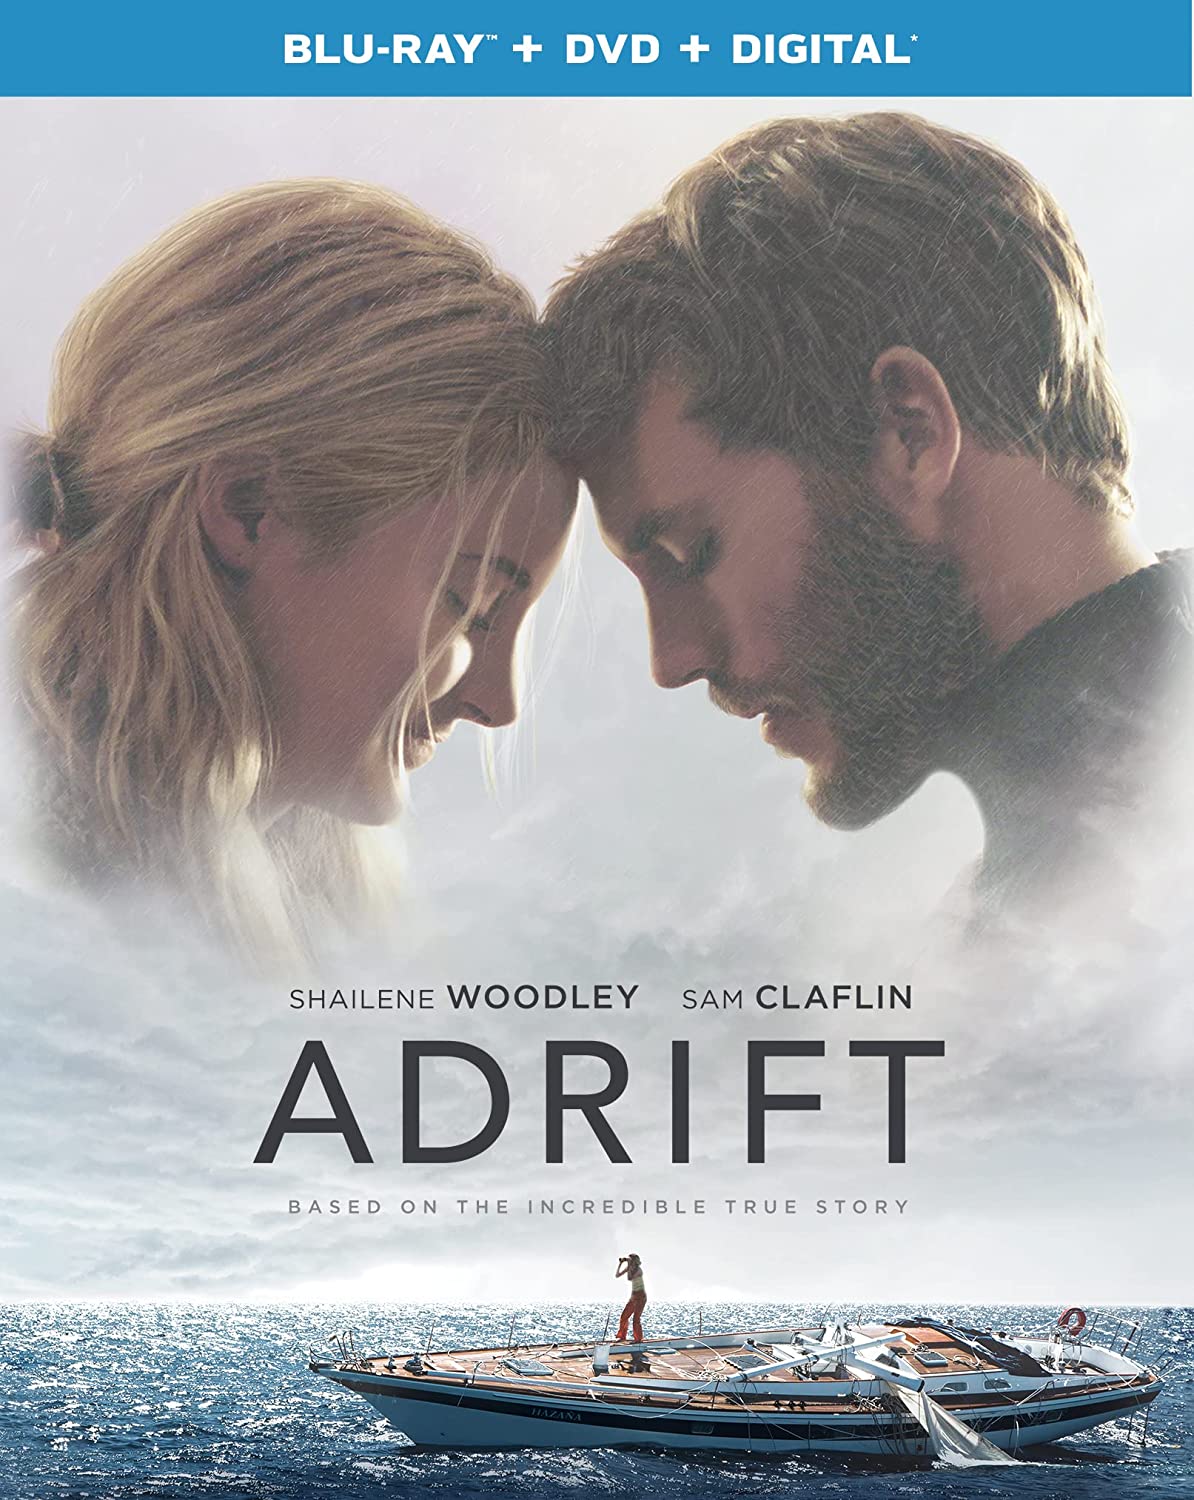 Adrift Blu-ray + DVD